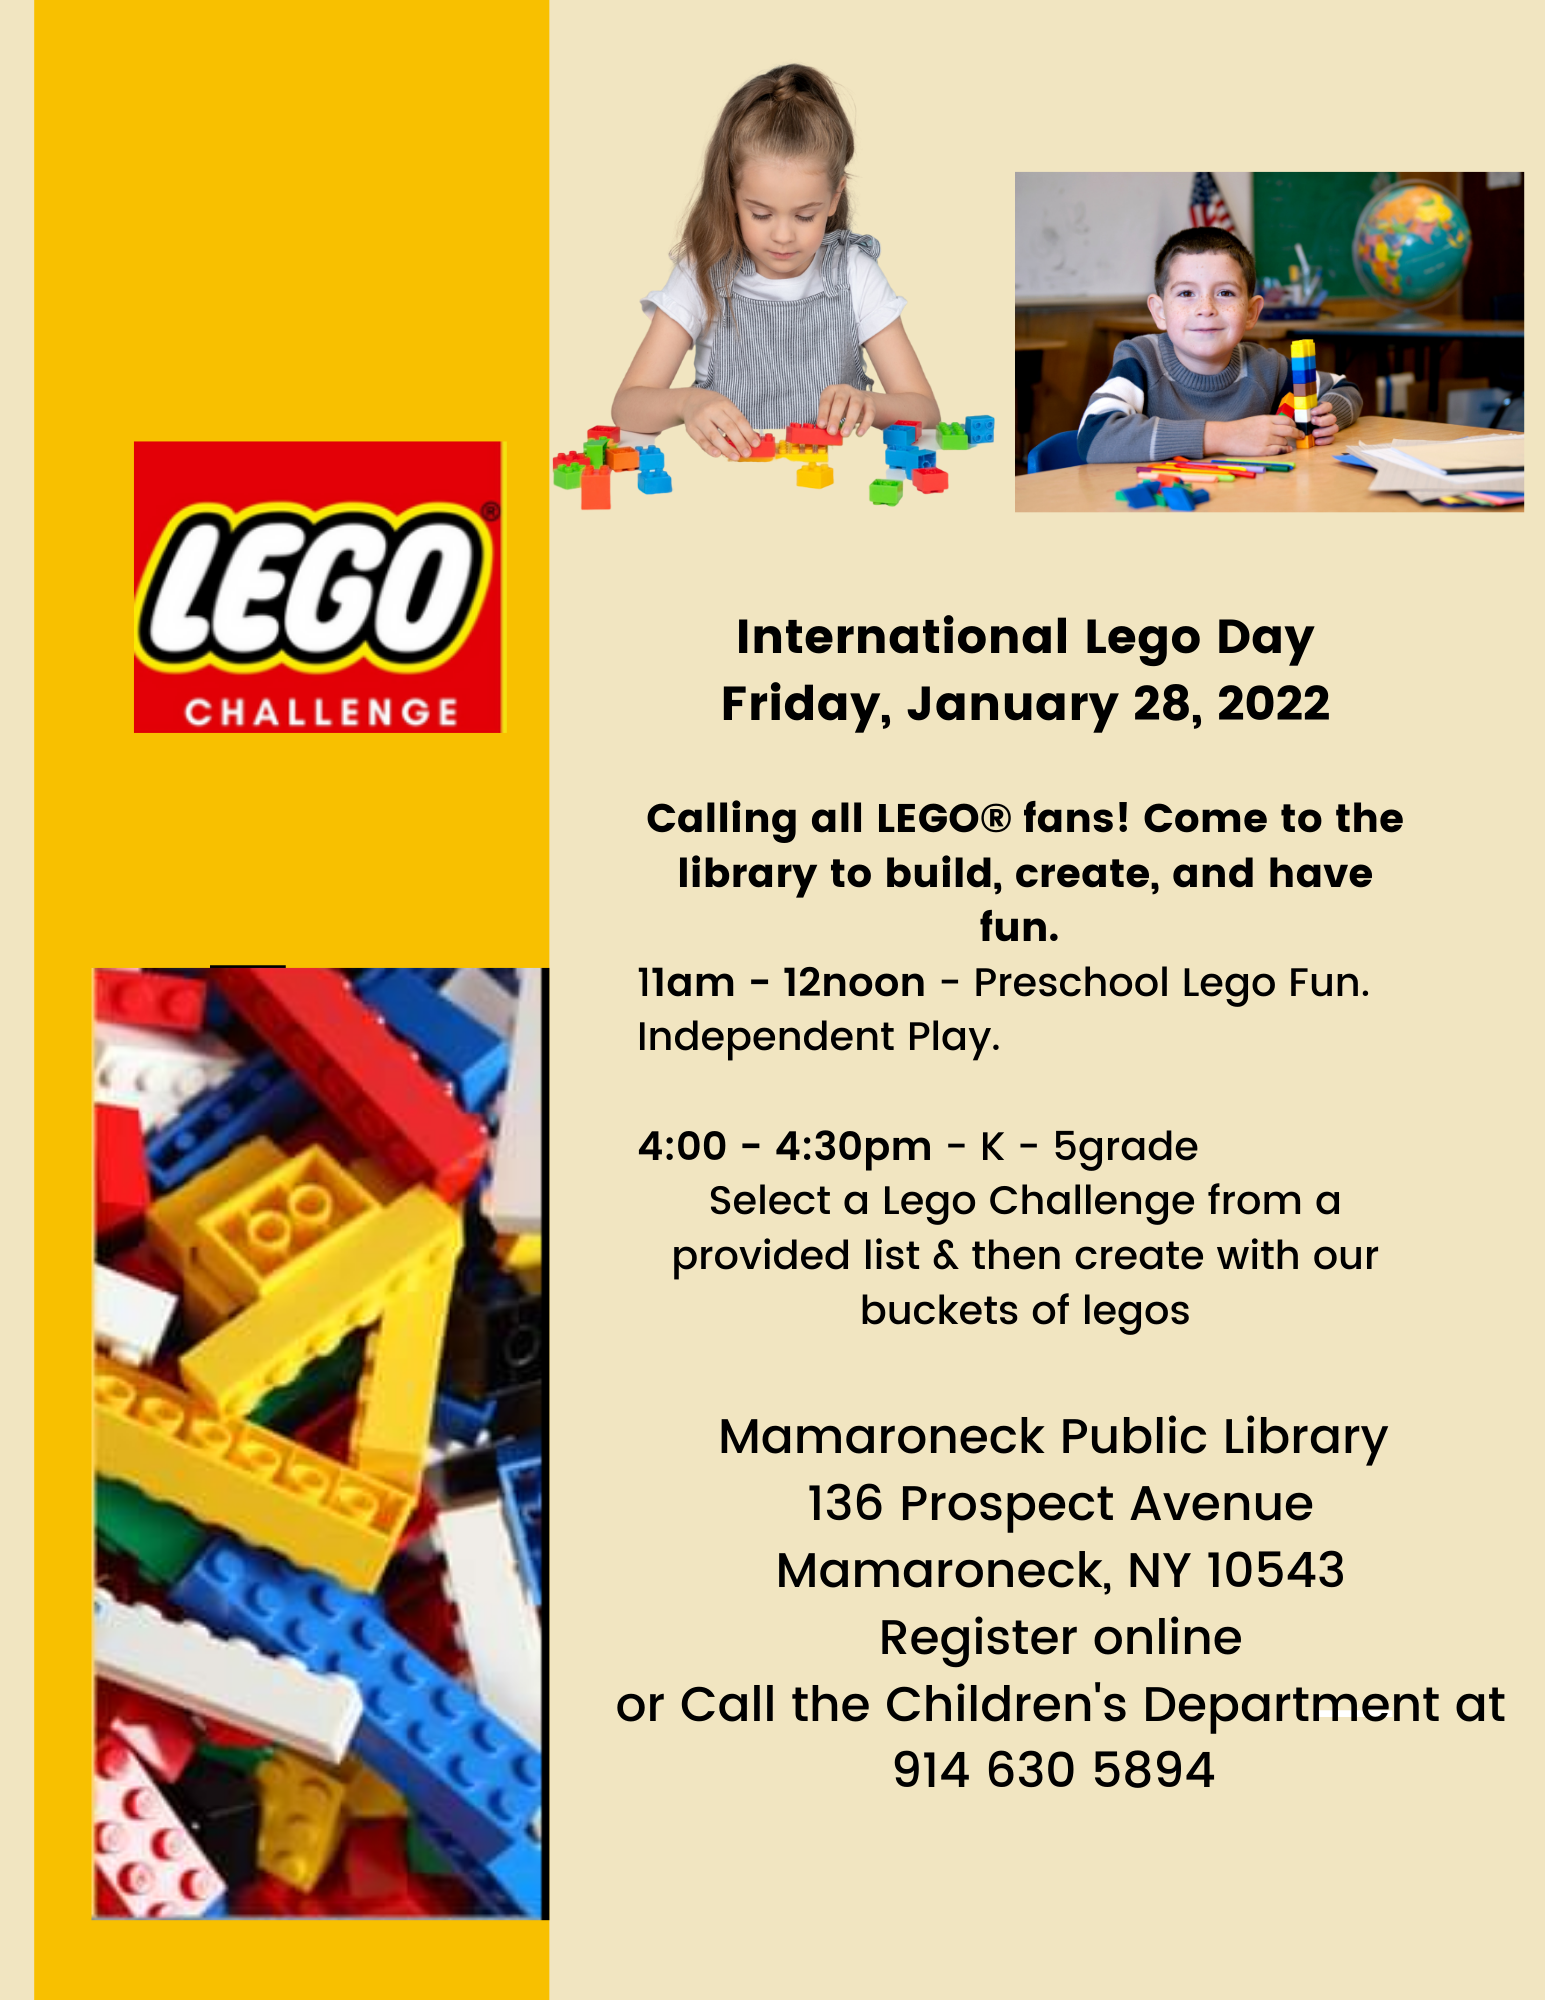 Int'l Lego Day - Friday, Jan. 28